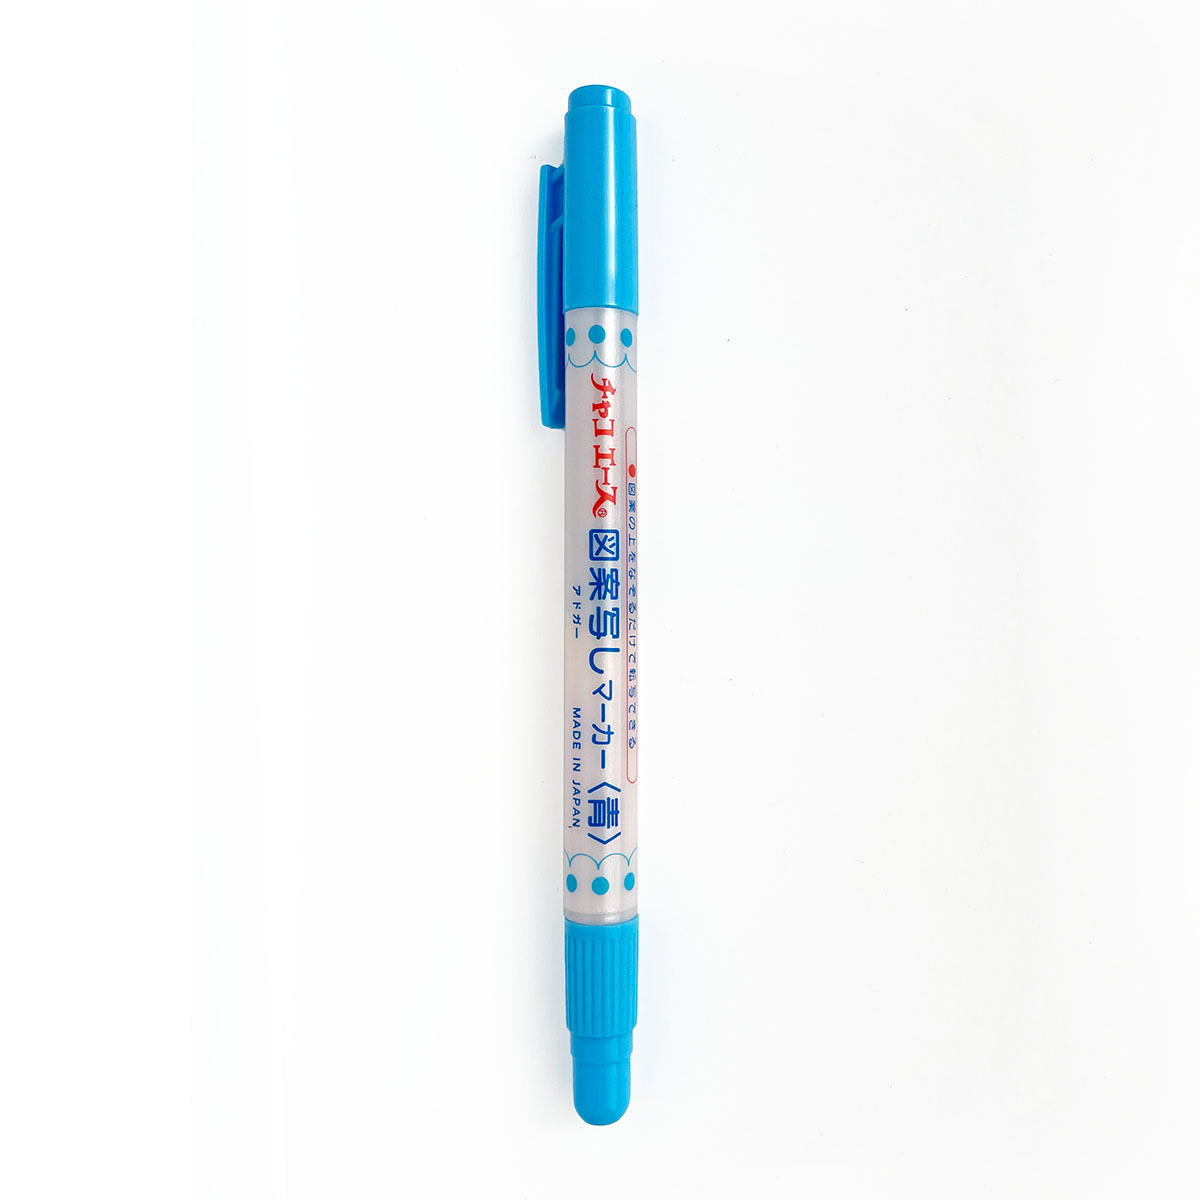 Adger water erasable marking pen - Maydel